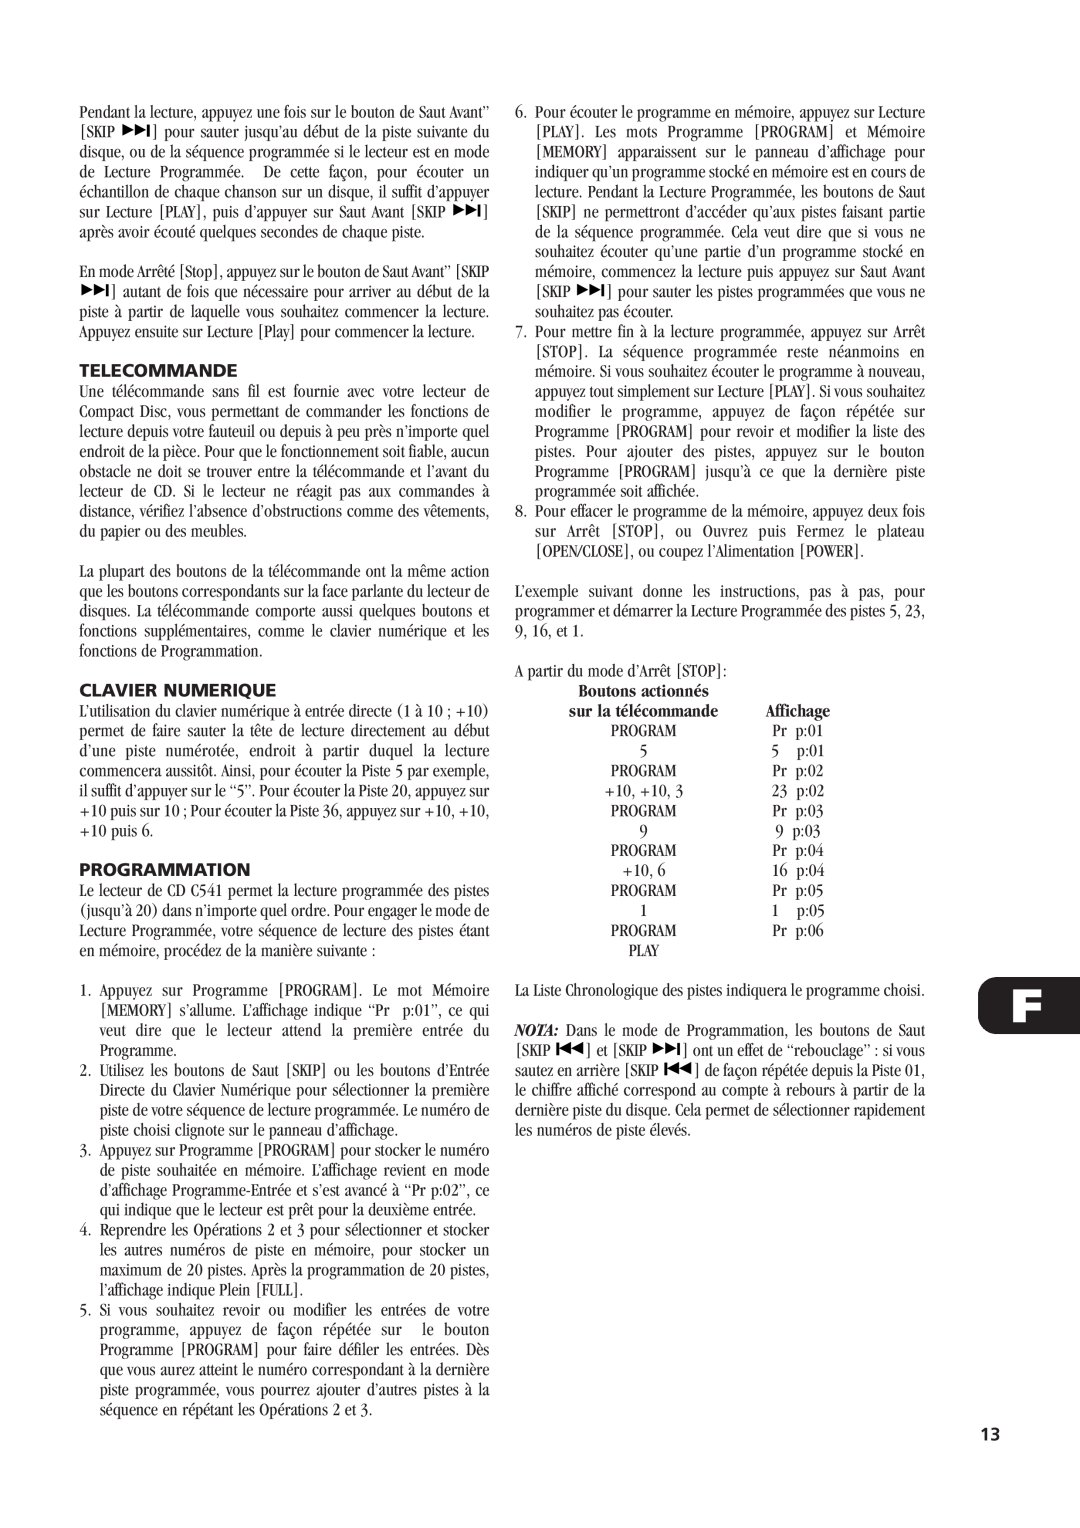 NAD C541 owner manual Telecommande, Clavier Numerique, Programmation 